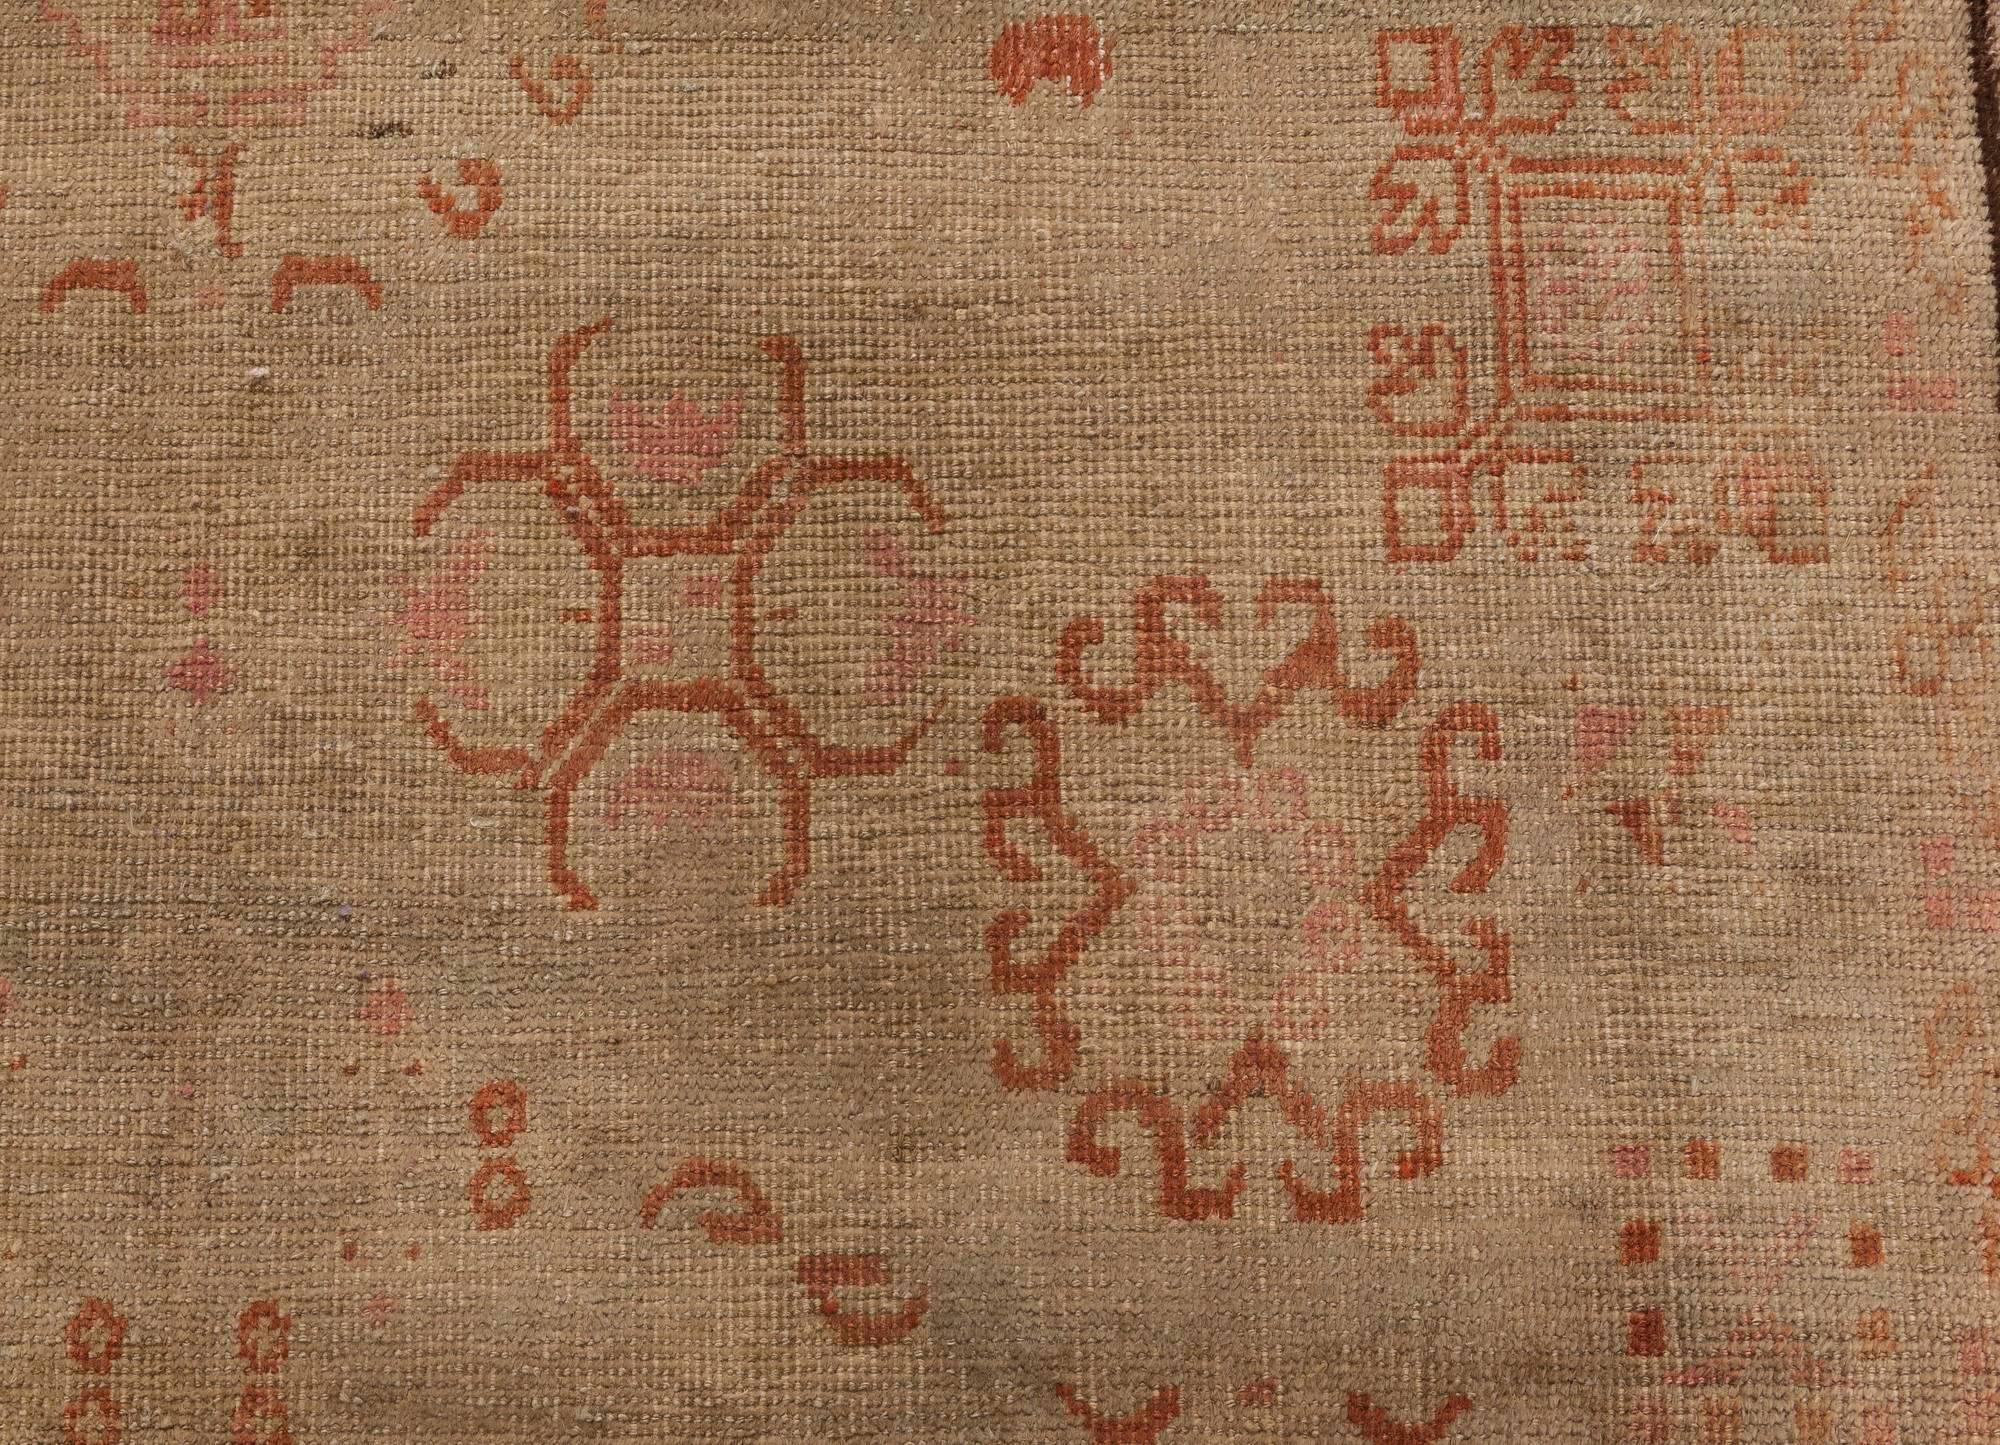 Midcentury Samarkand handmade wool rug.
Size: 6'5